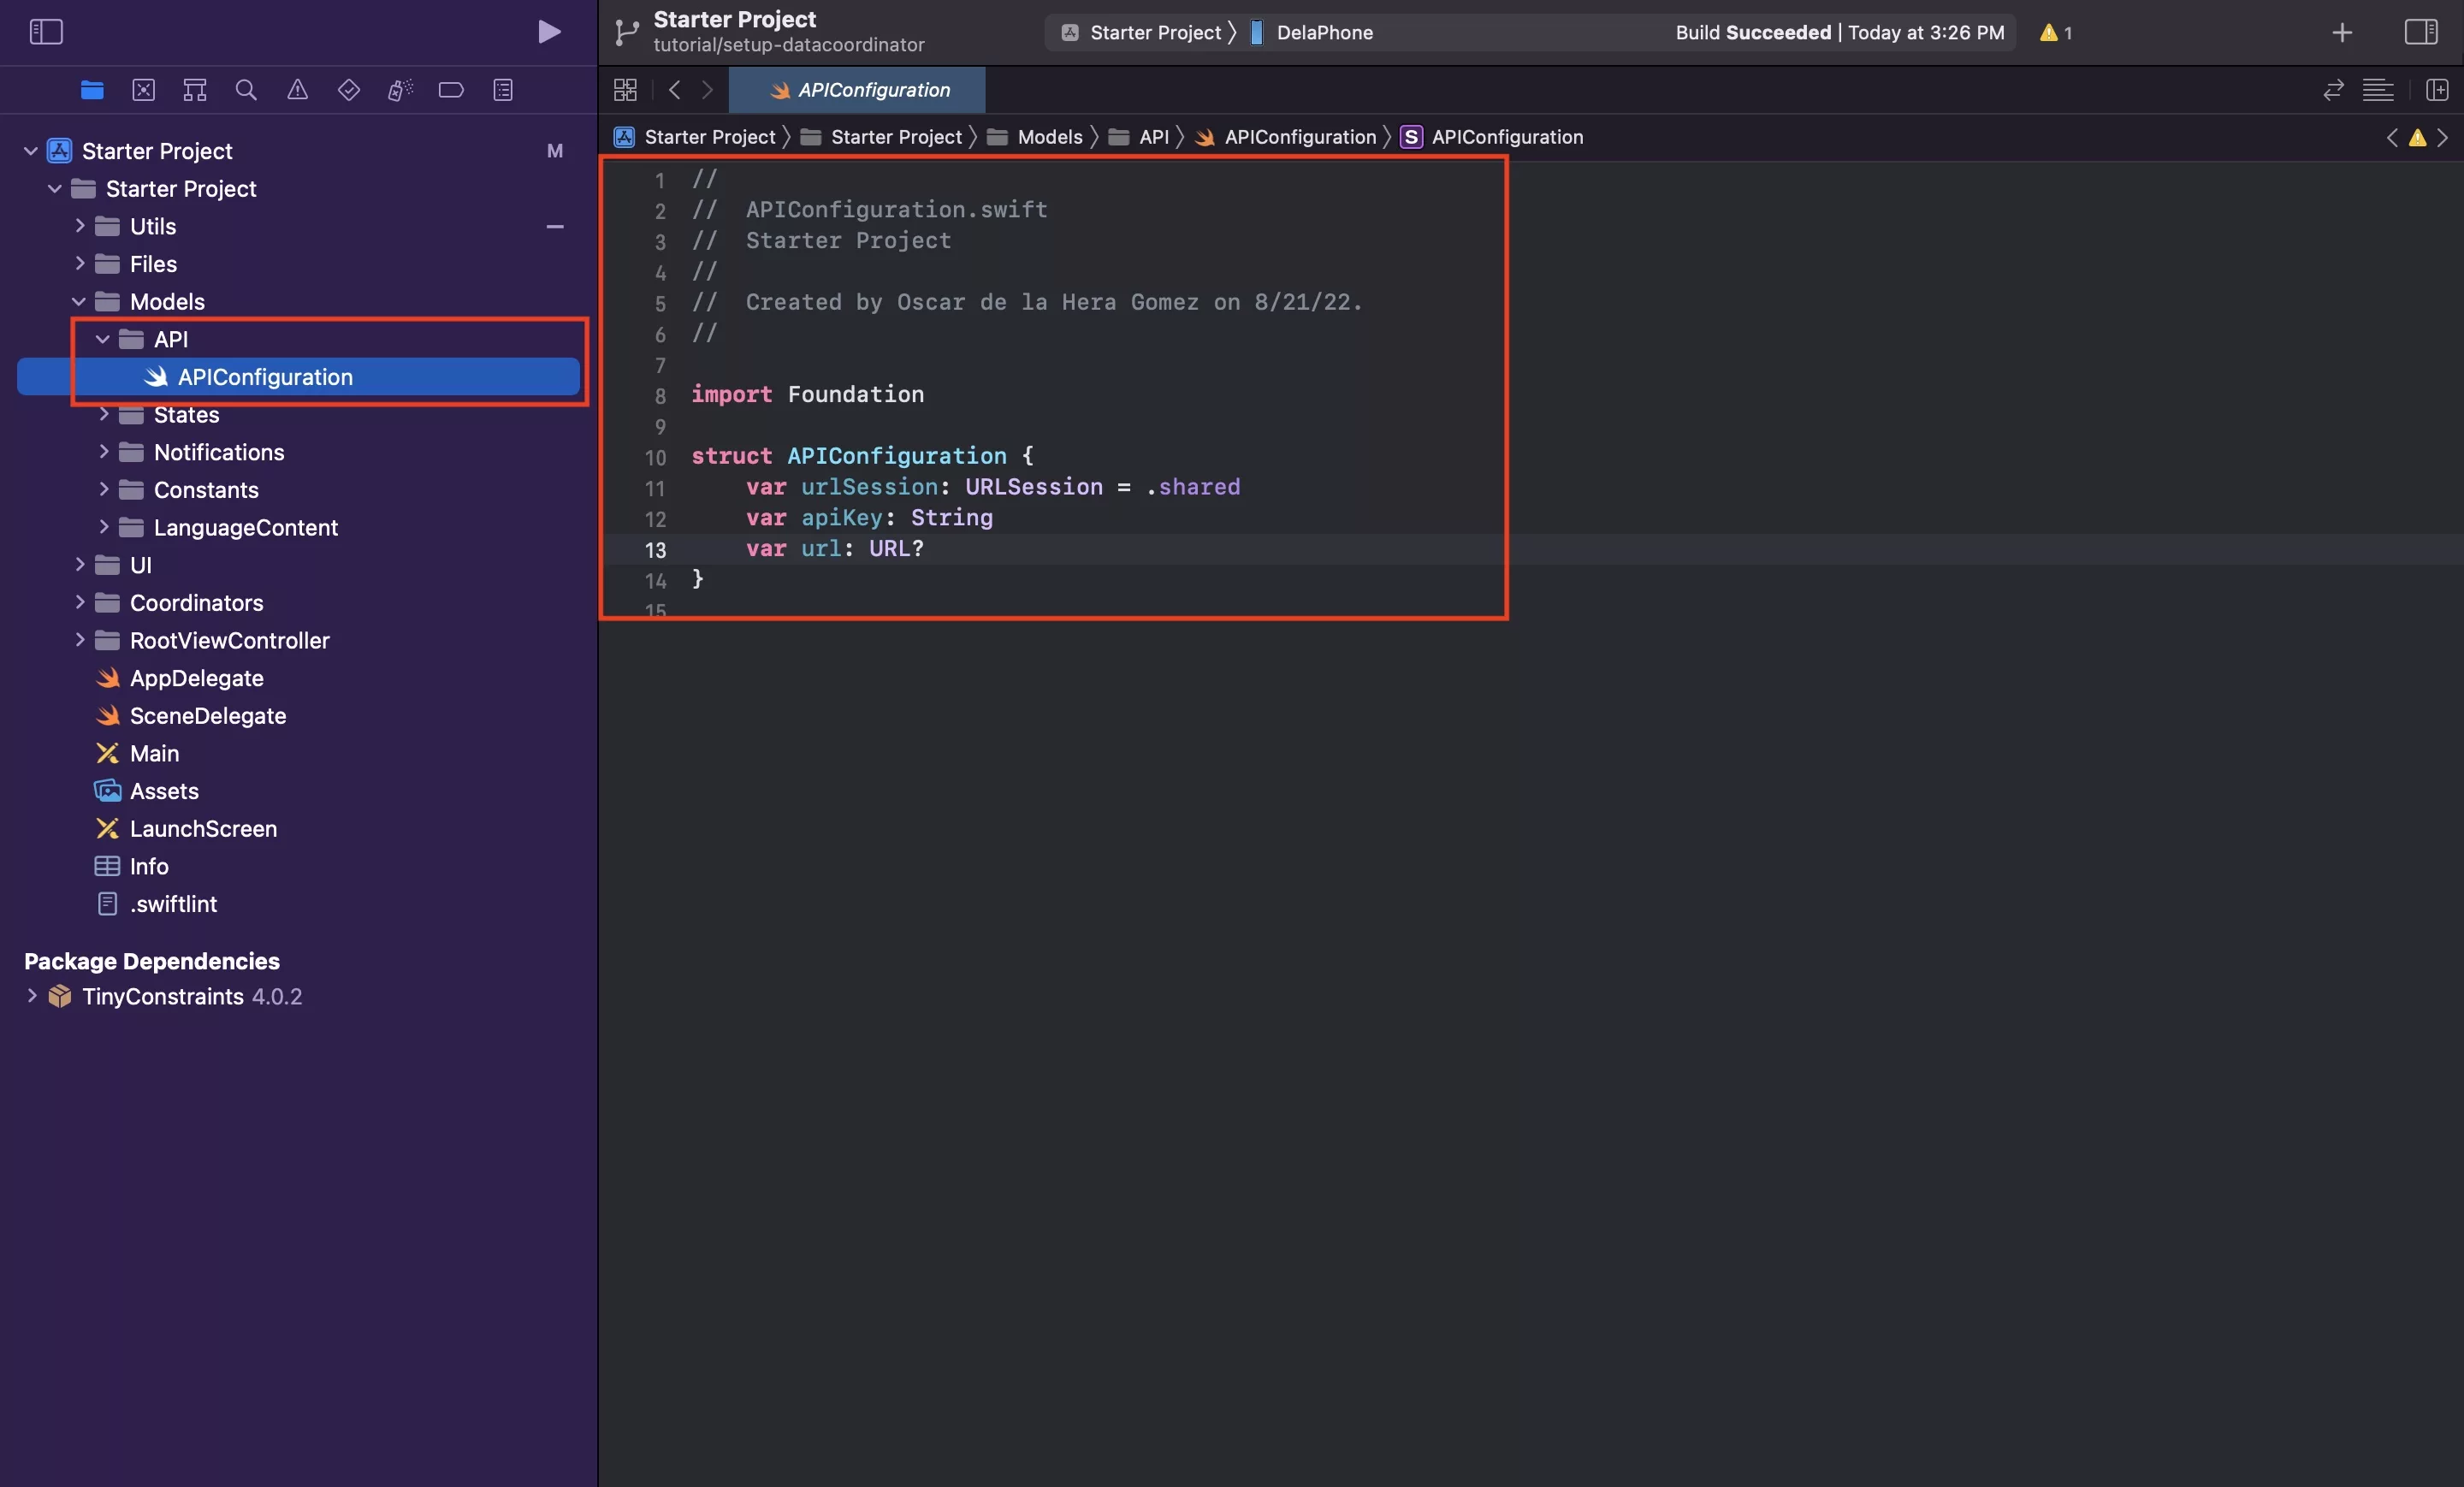 A screenshot showing you the code of the API Configuration model.